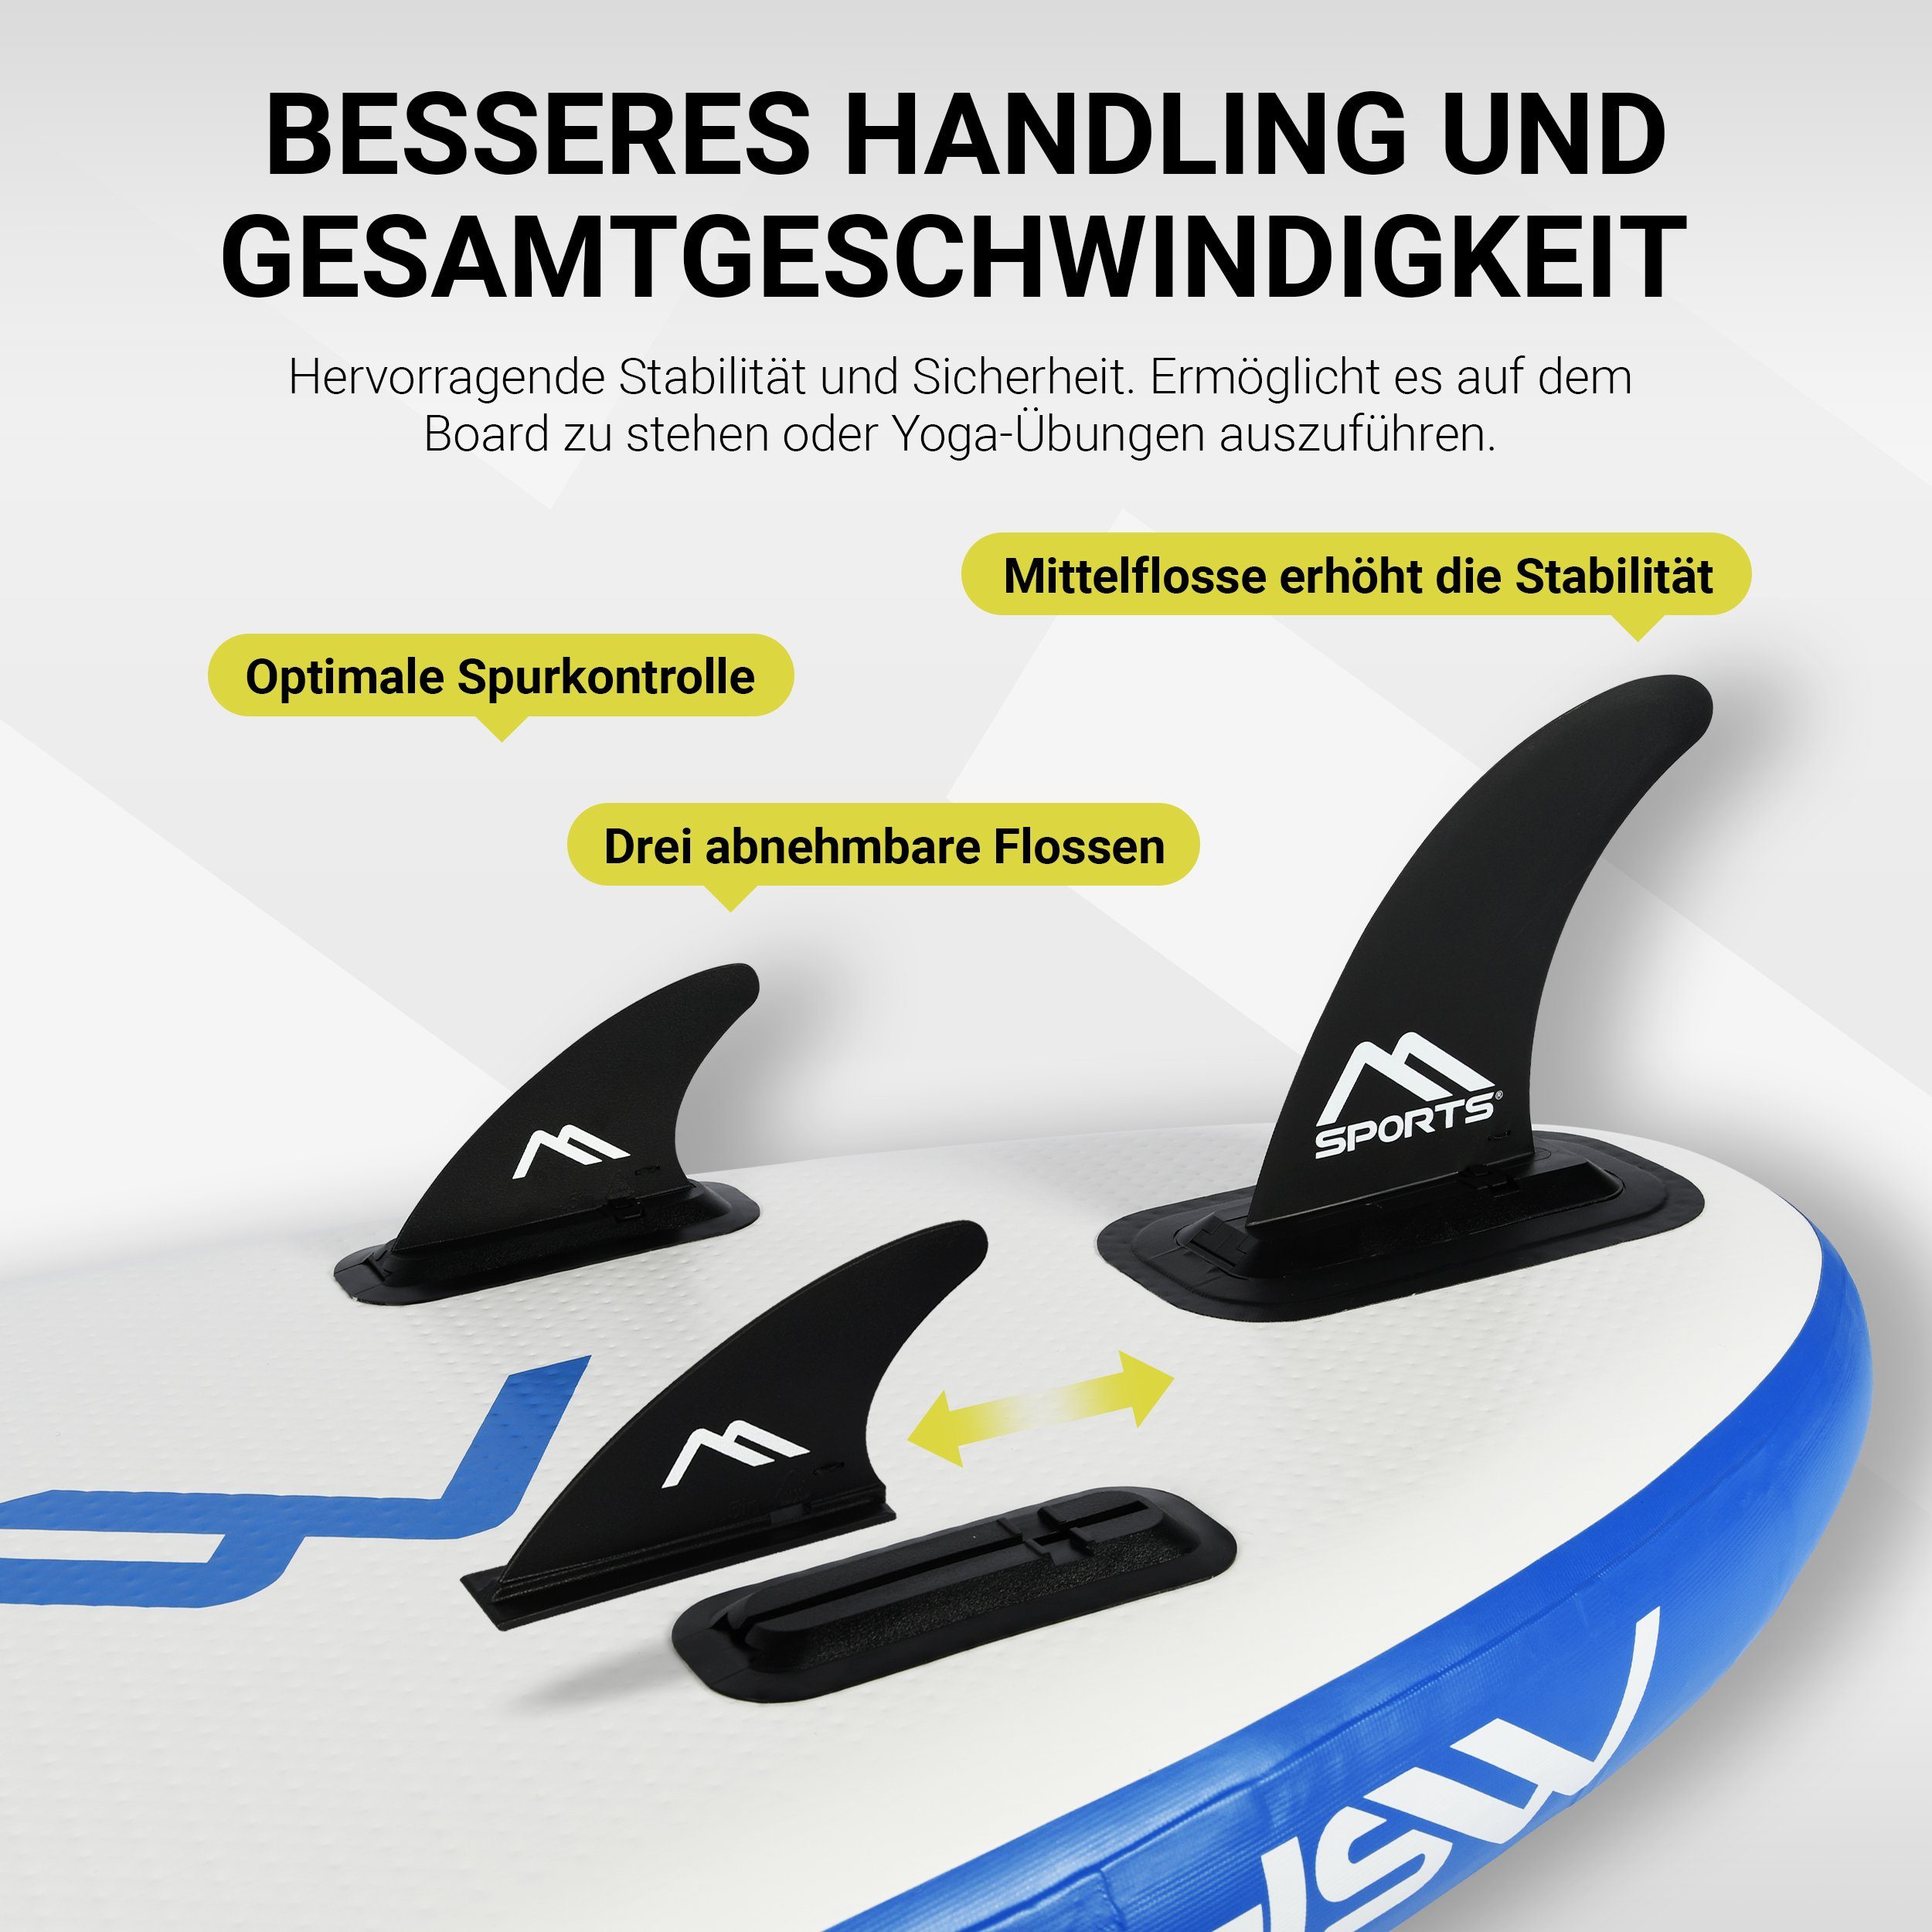 MSports® Blau Up Aufblasbar SUP-Board Inflatable Komplettes Board Stand Paddleboard Zubehör Paddle inkl.